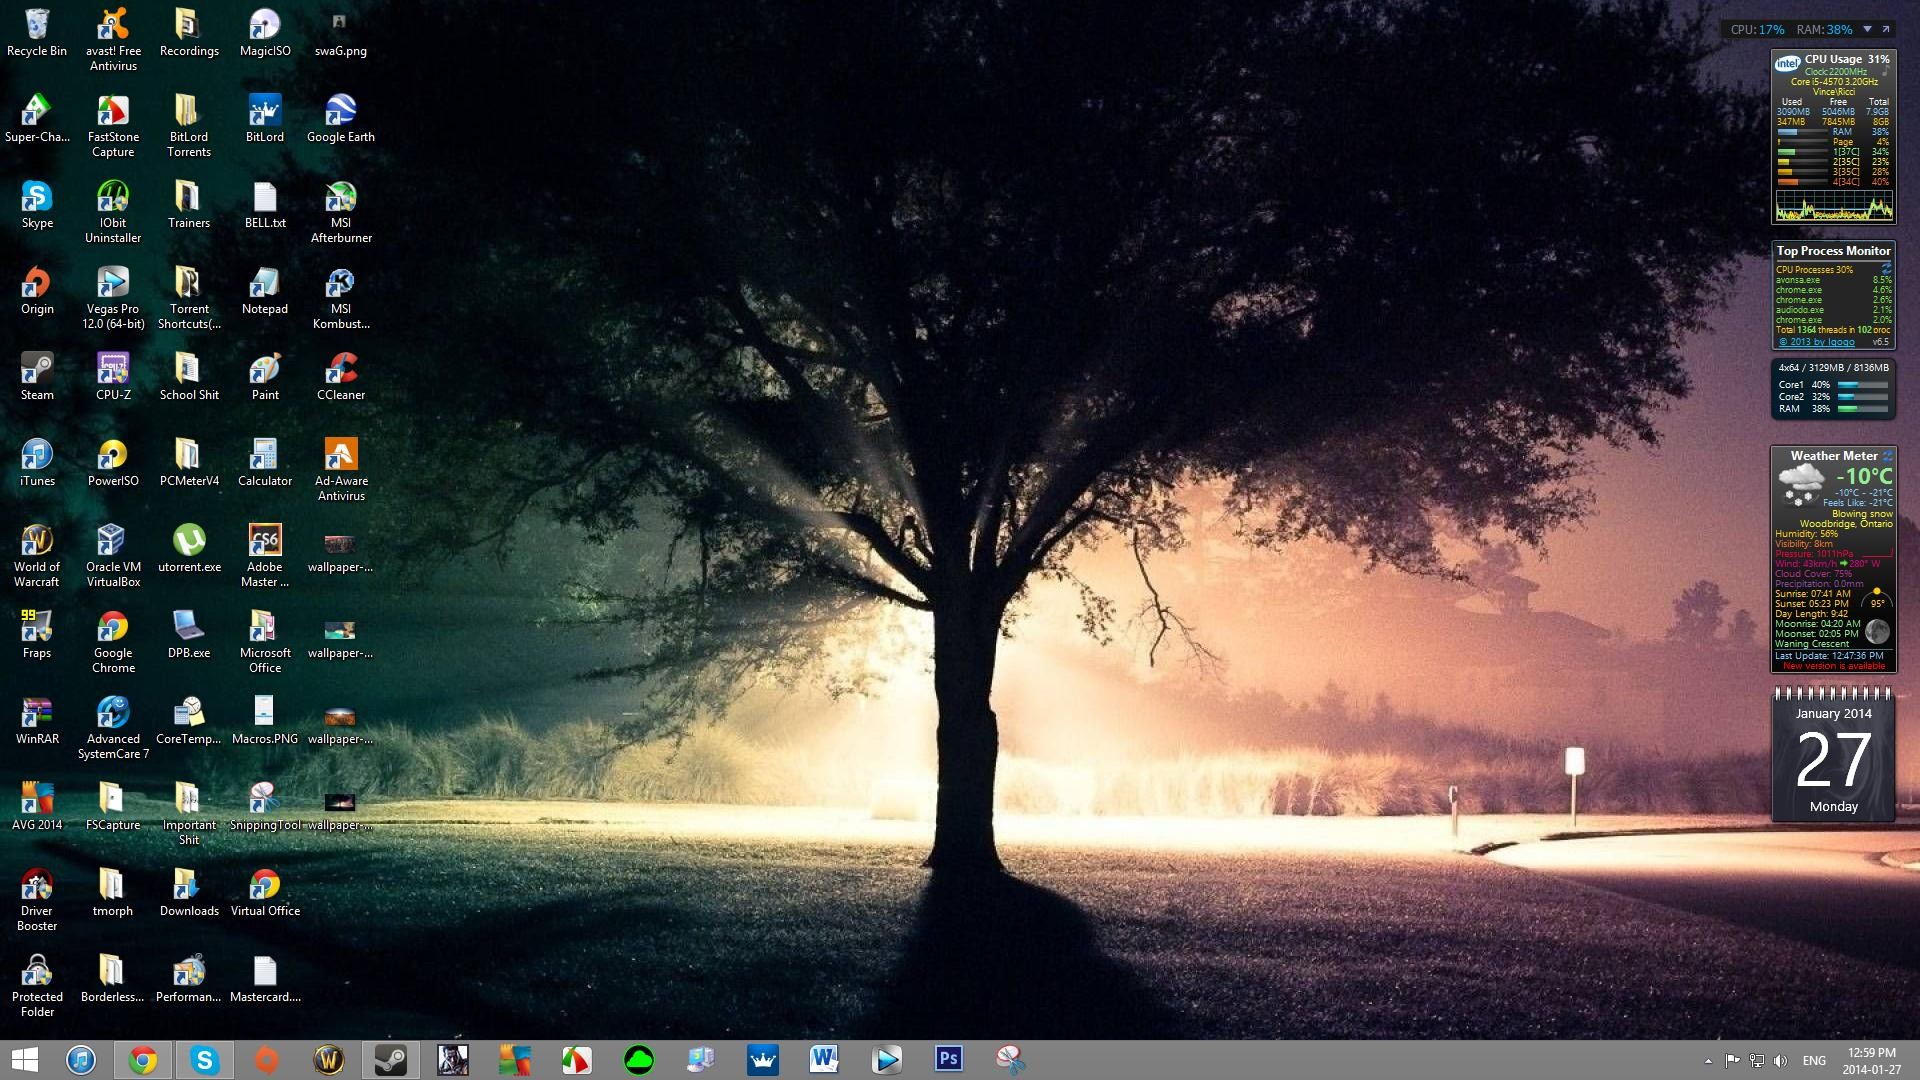 1920x1080 ... my desktop - http://i.imgur.com/I7StMJM.jpg